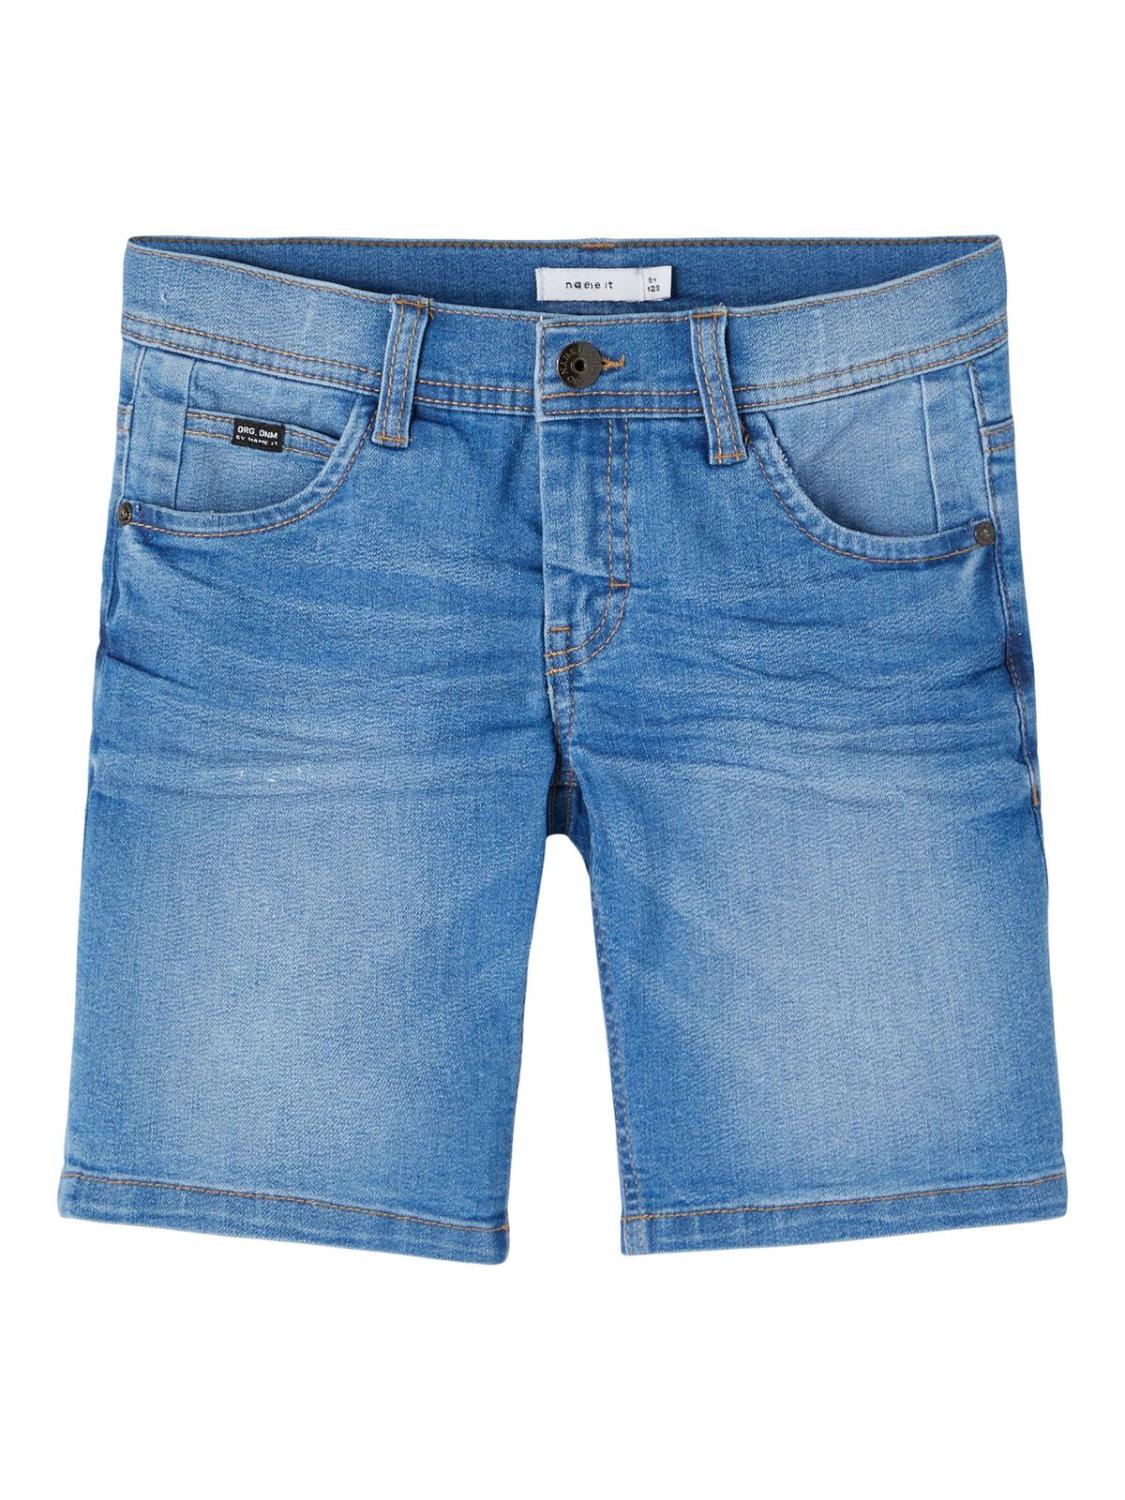 Sofus Denim Long Shorts - Light blue denim